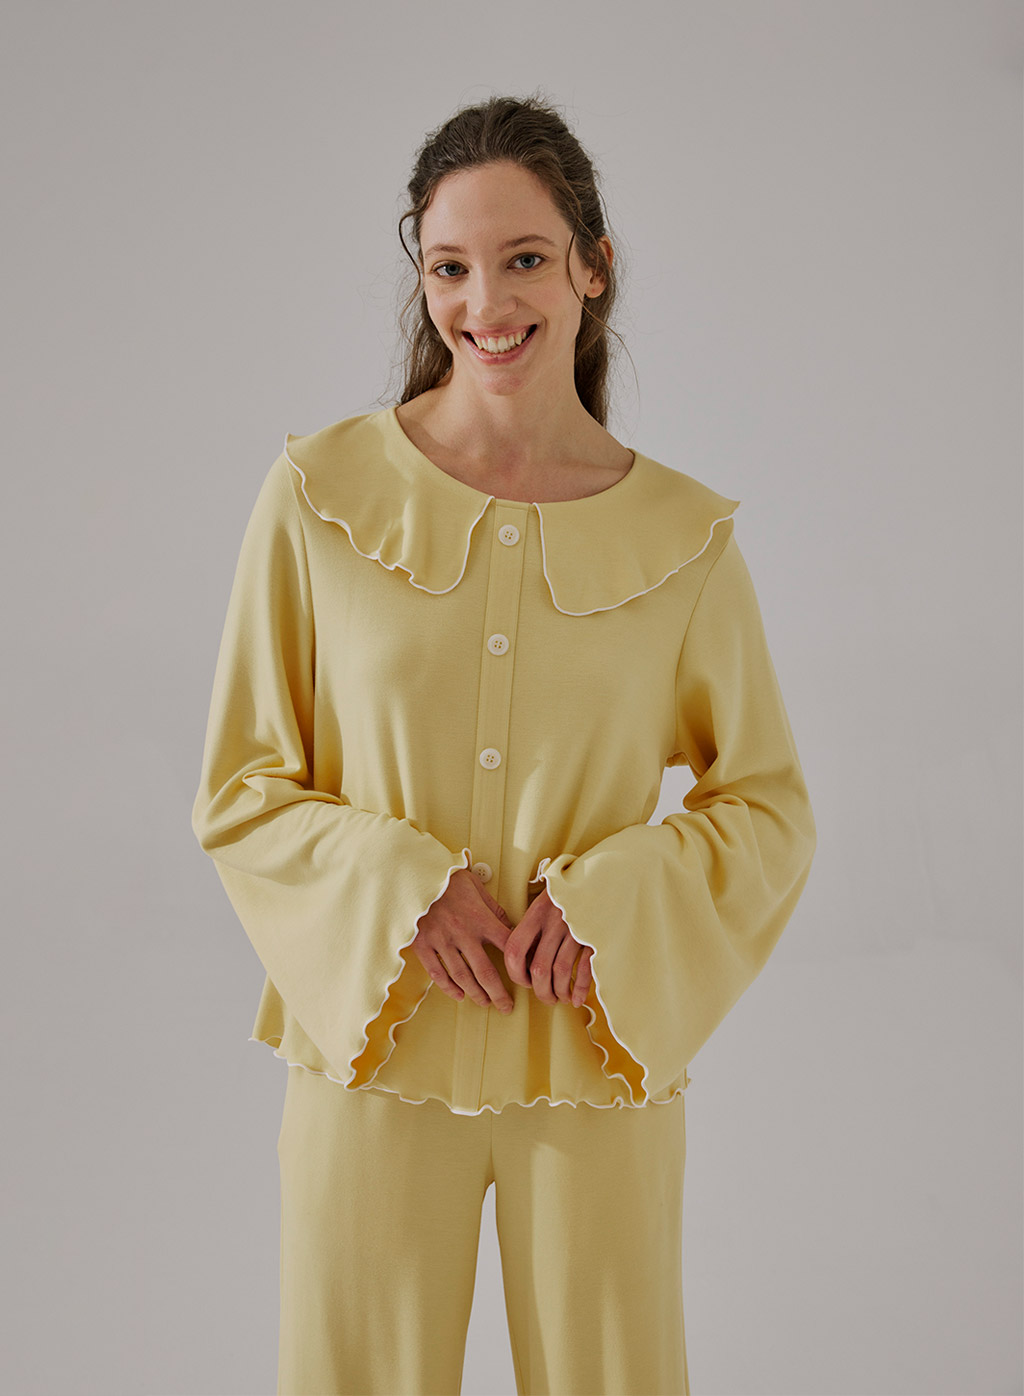 CRLAYDK New in Women's Pajamas Jacquard Ruffle Large Collar Cute Loungwear  Soft Silk Long Sleeve Sleepwear Button Down Nightwear